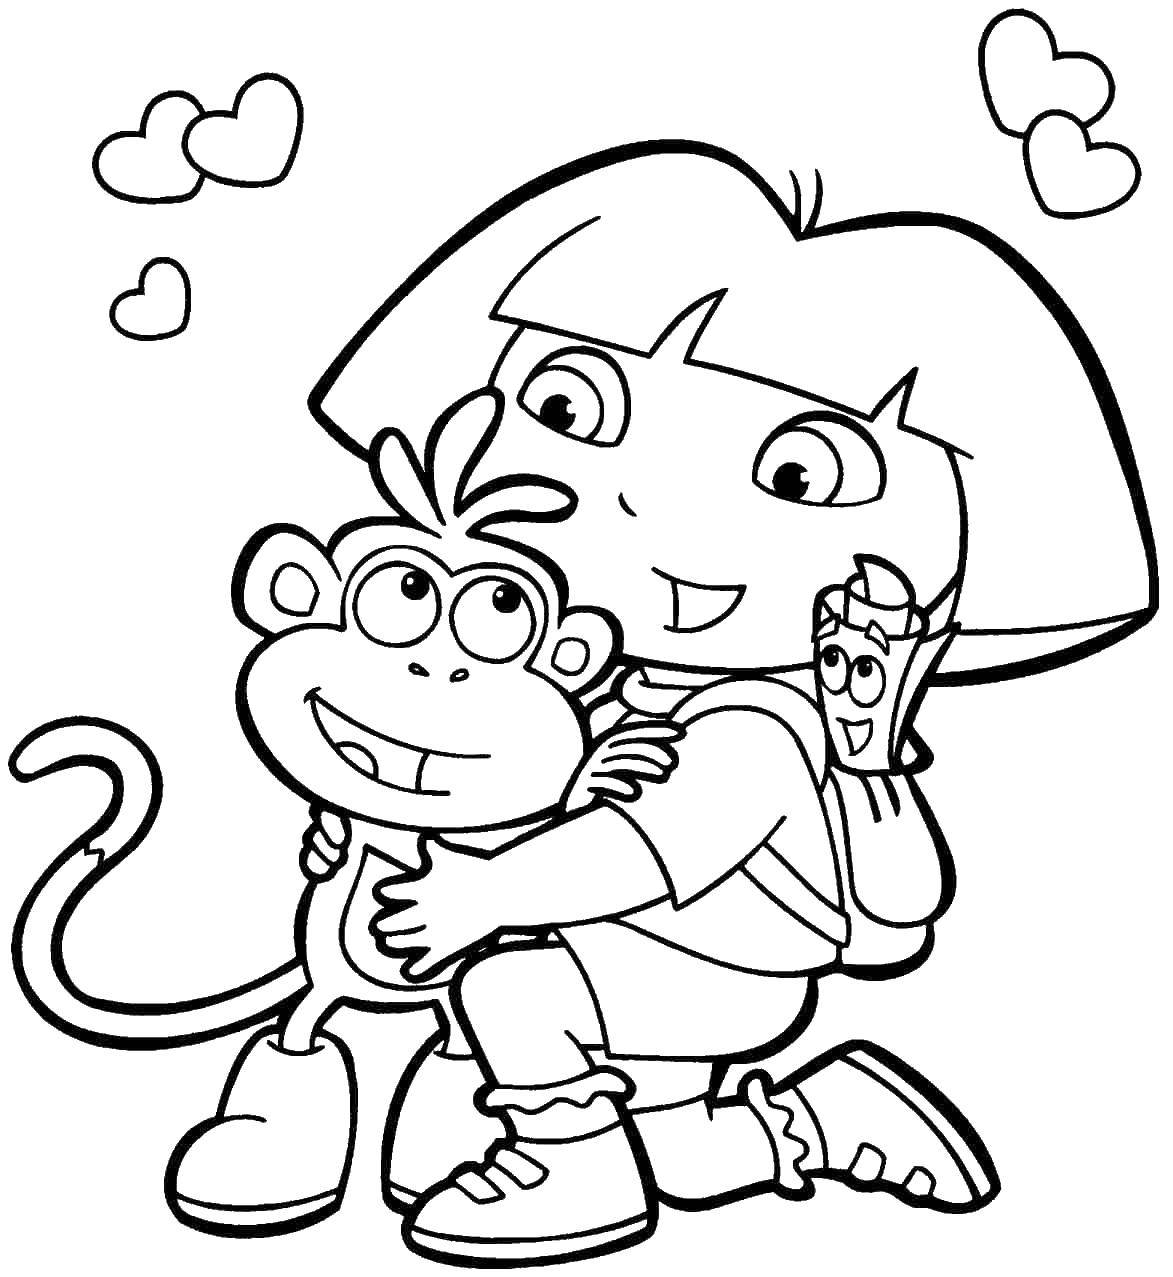 Coloring Dasha and slipper best friends. Category cartoons. Tags:  Cartoon character, Dora the Explorer, Dora, Boots.